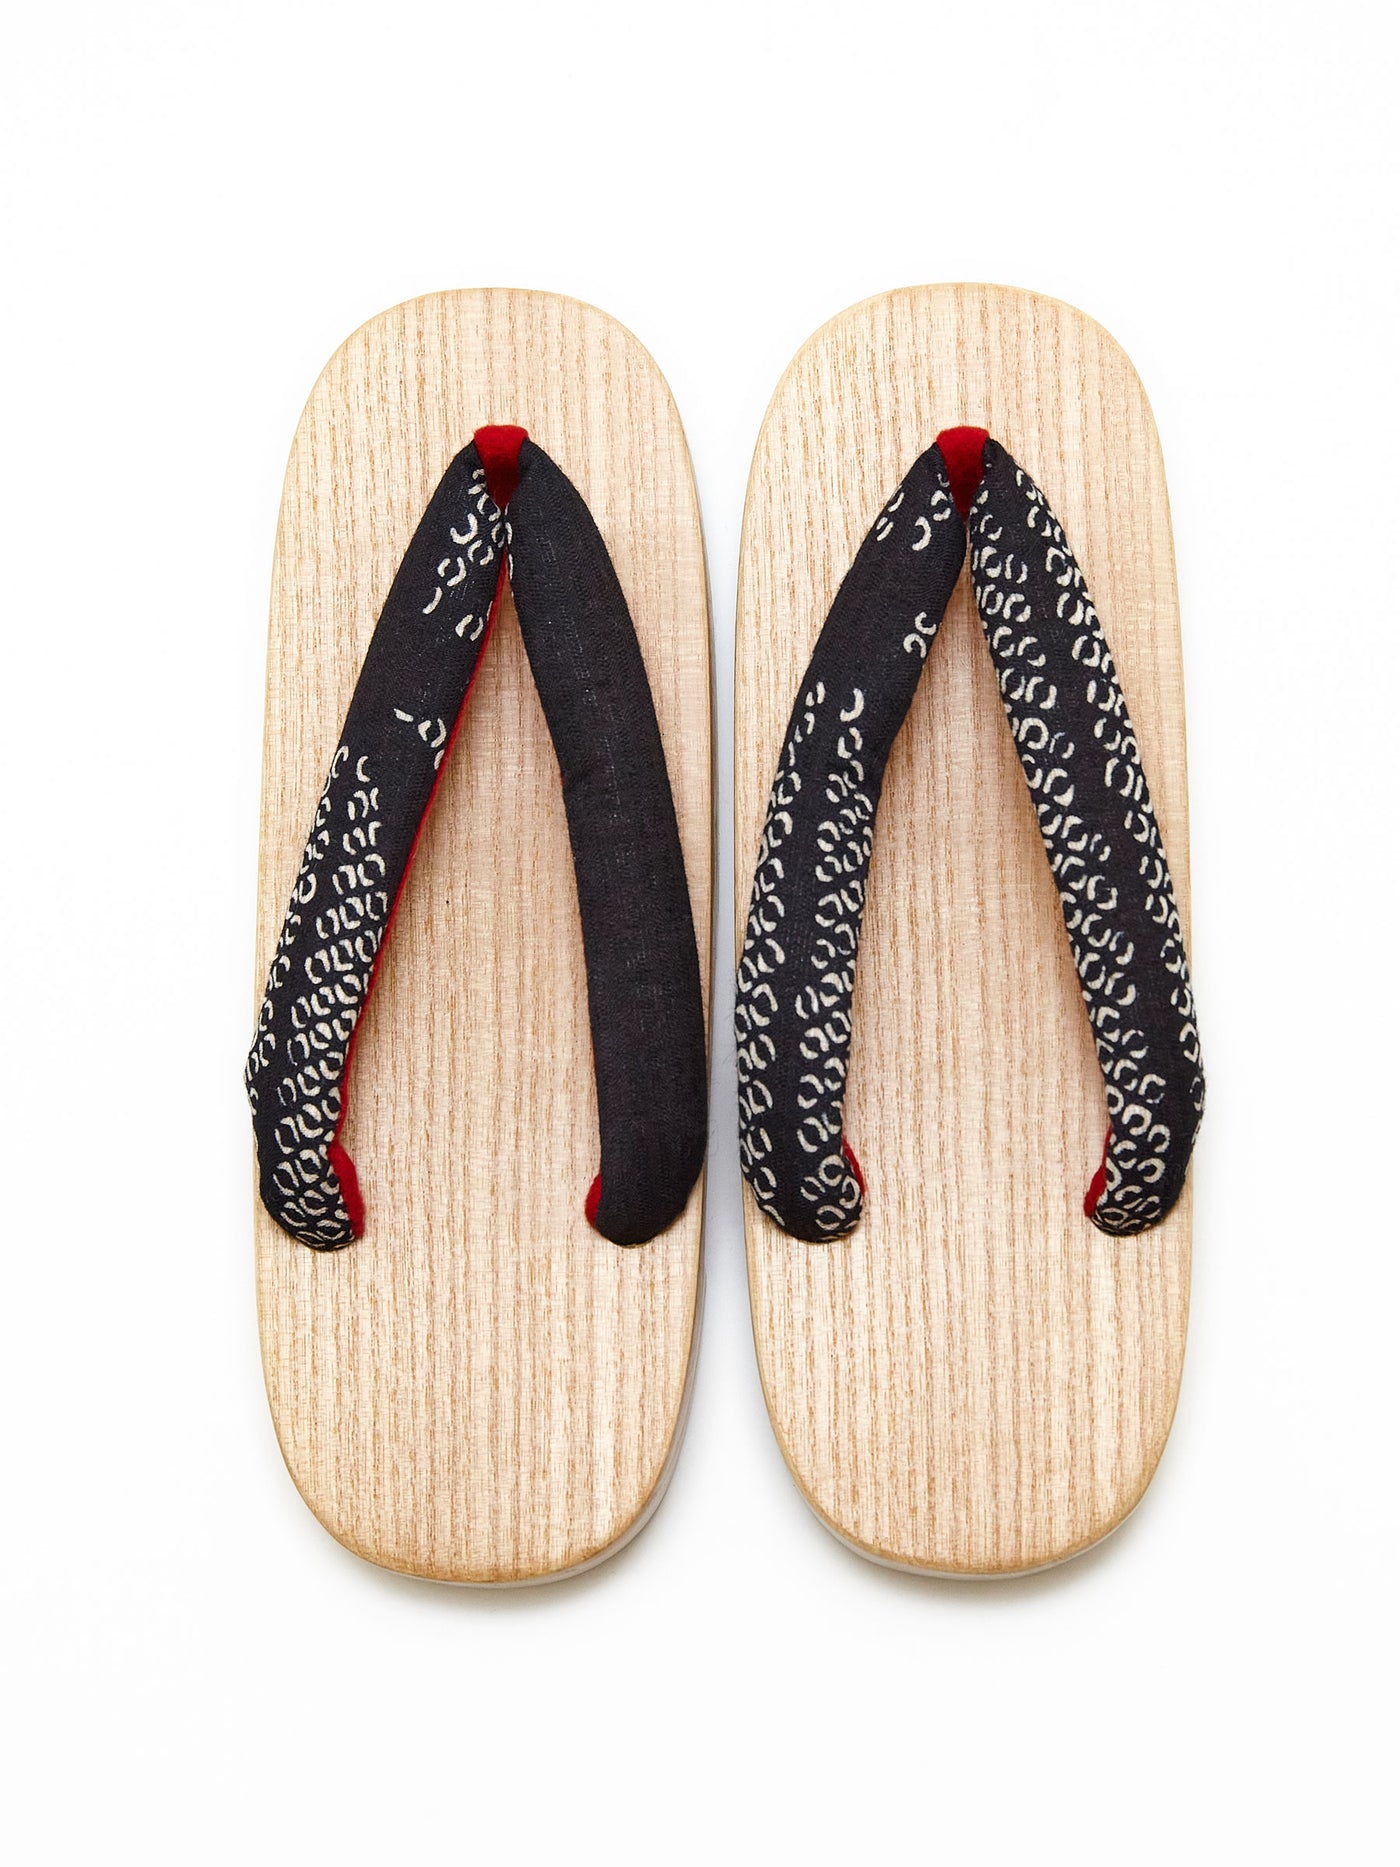 Shibori Wooden Geta Sandals